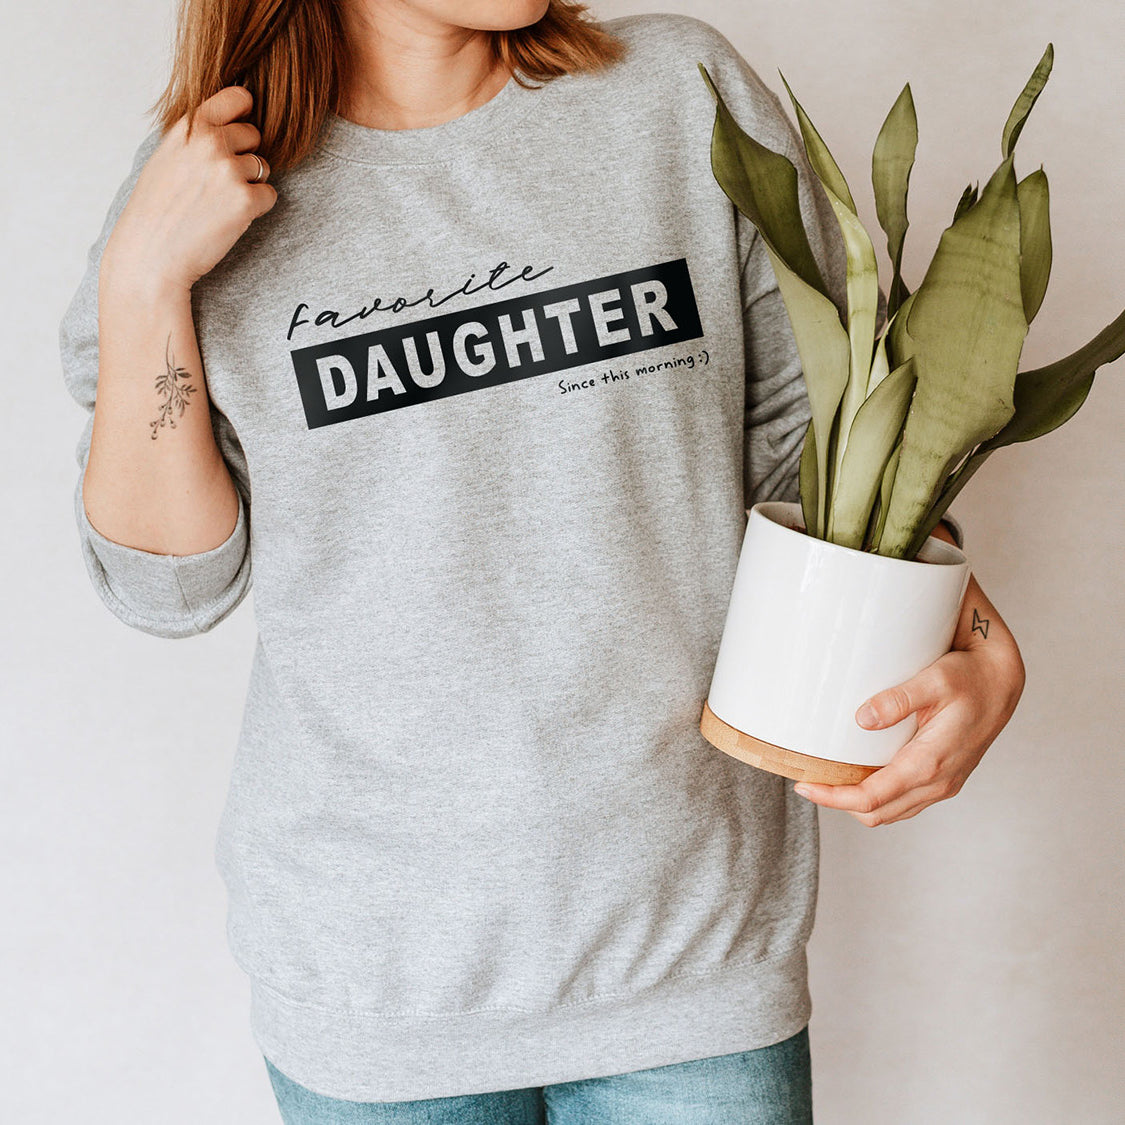 Favorite Daughter Since This Morning Sweatshirt - Funny Daughter Design Printed Sweatshirt